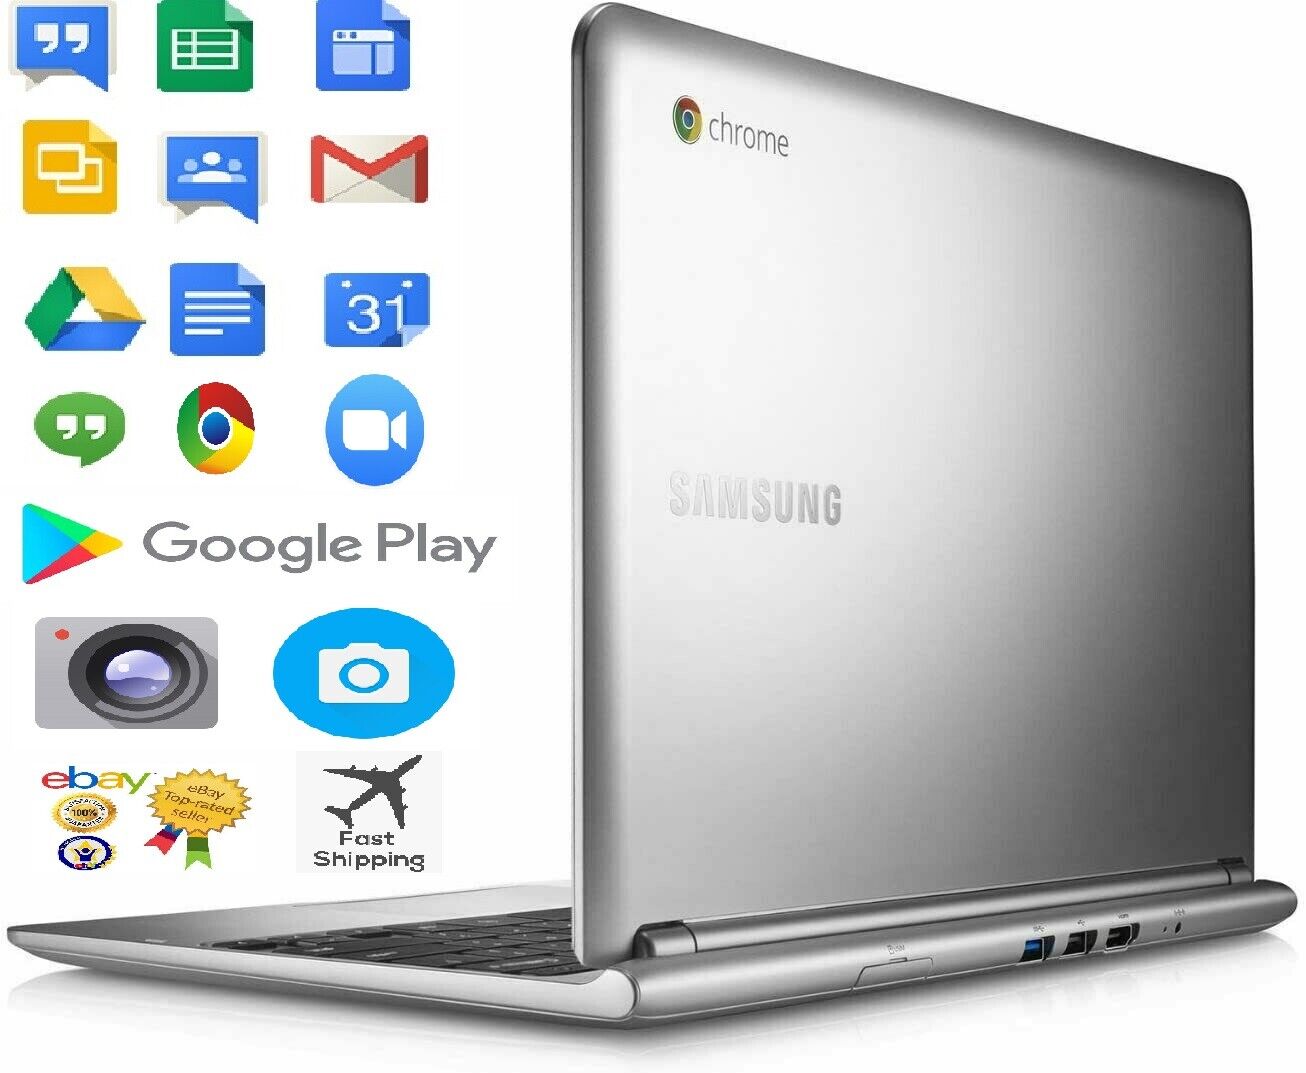 Samsung Laptop Chromebook XE303C12-A01US, Dual-Core 1.7GHz 2GB 16GB 